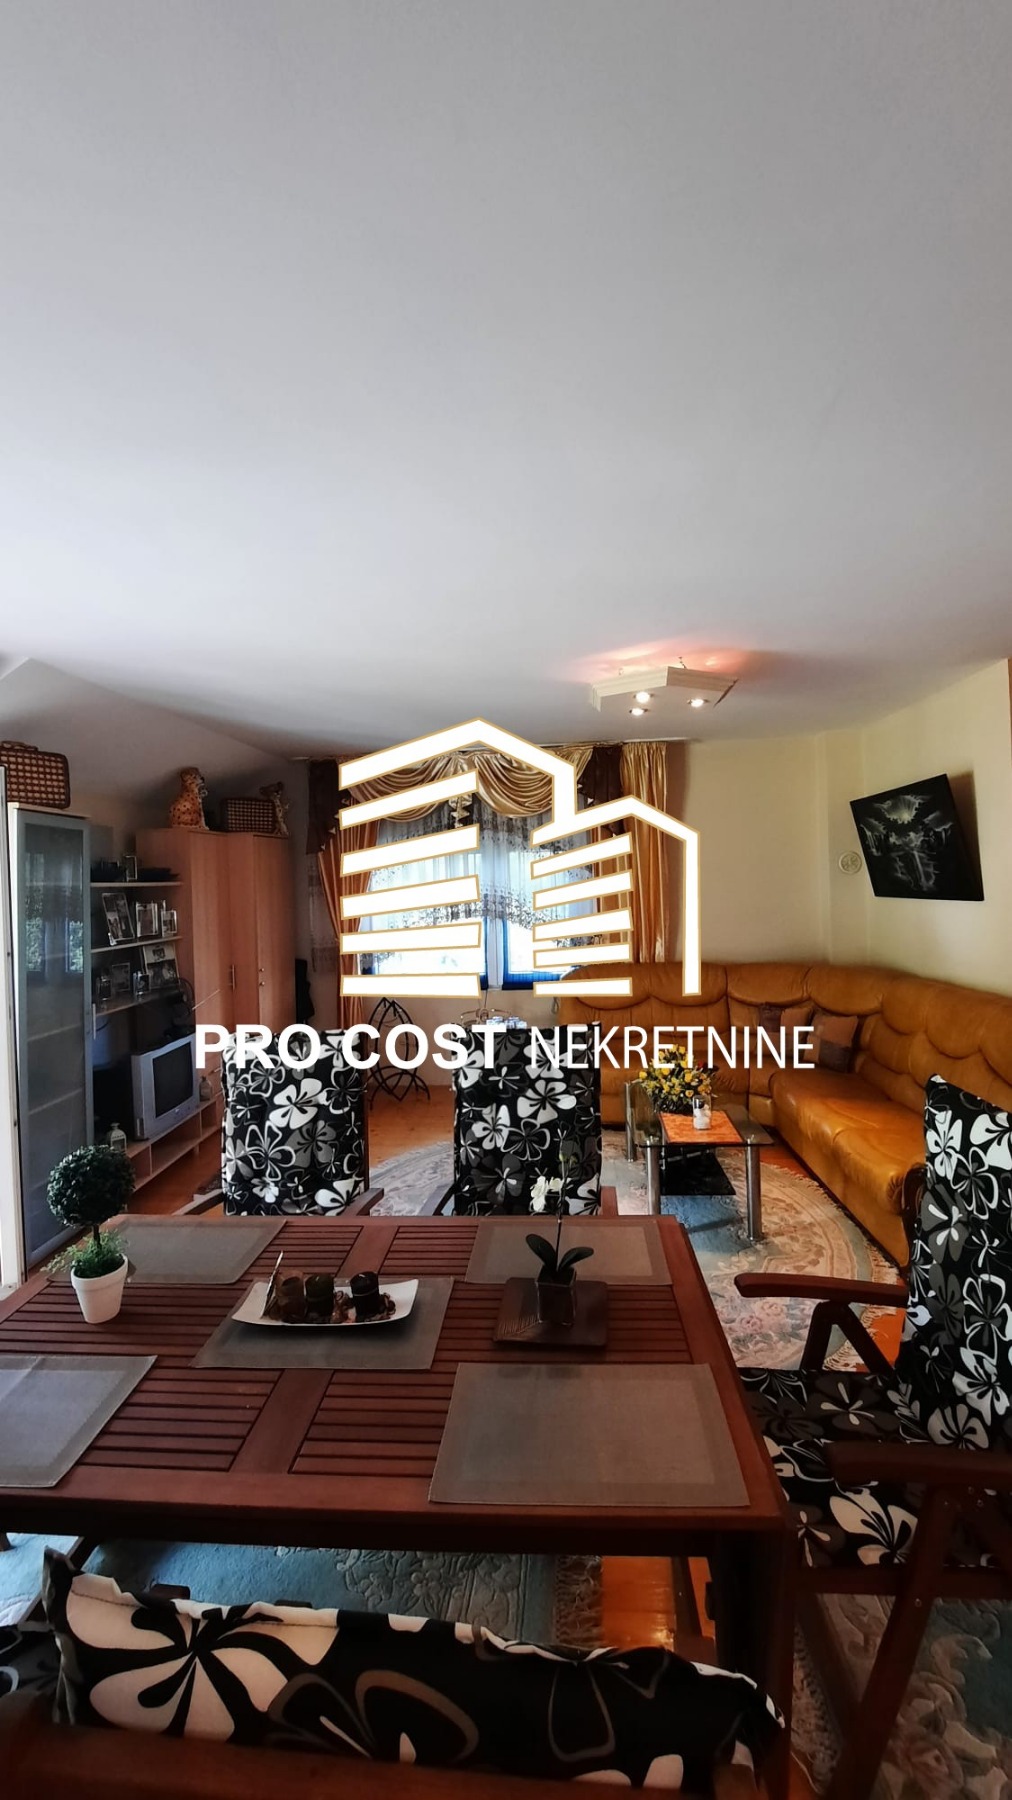 PRO COST – Kuća 256 m², Miševići-Hadžići